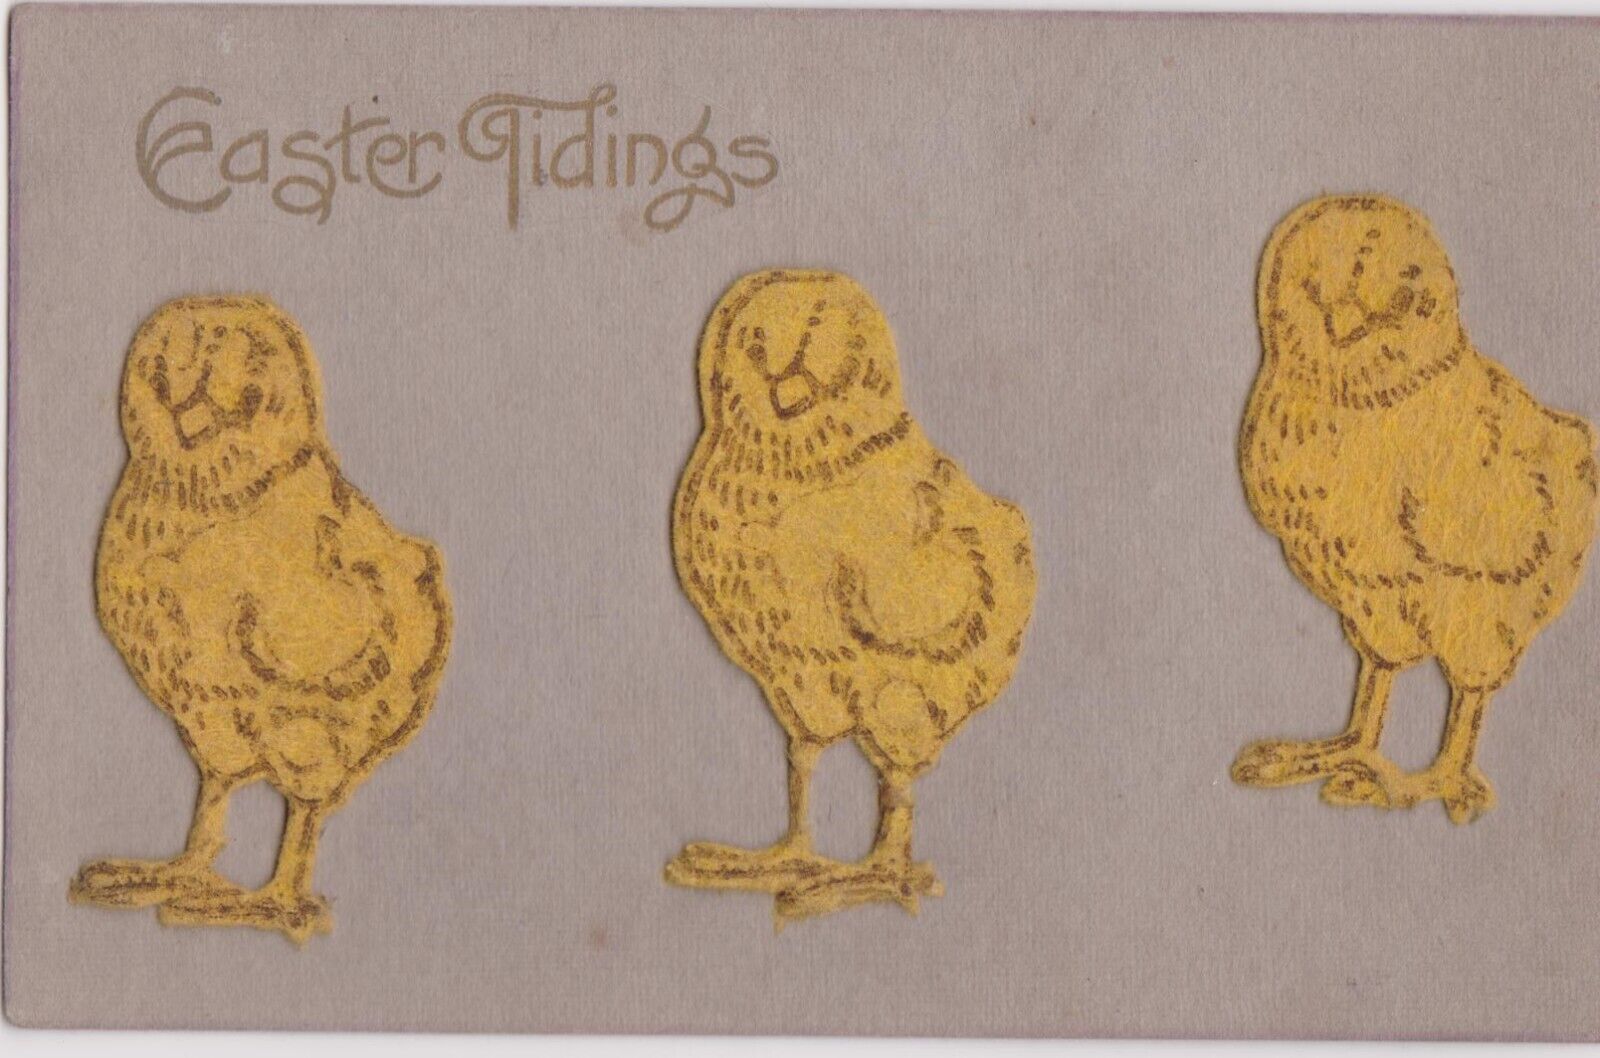 Antique Easter Tidings Postcard Felt Chicks 